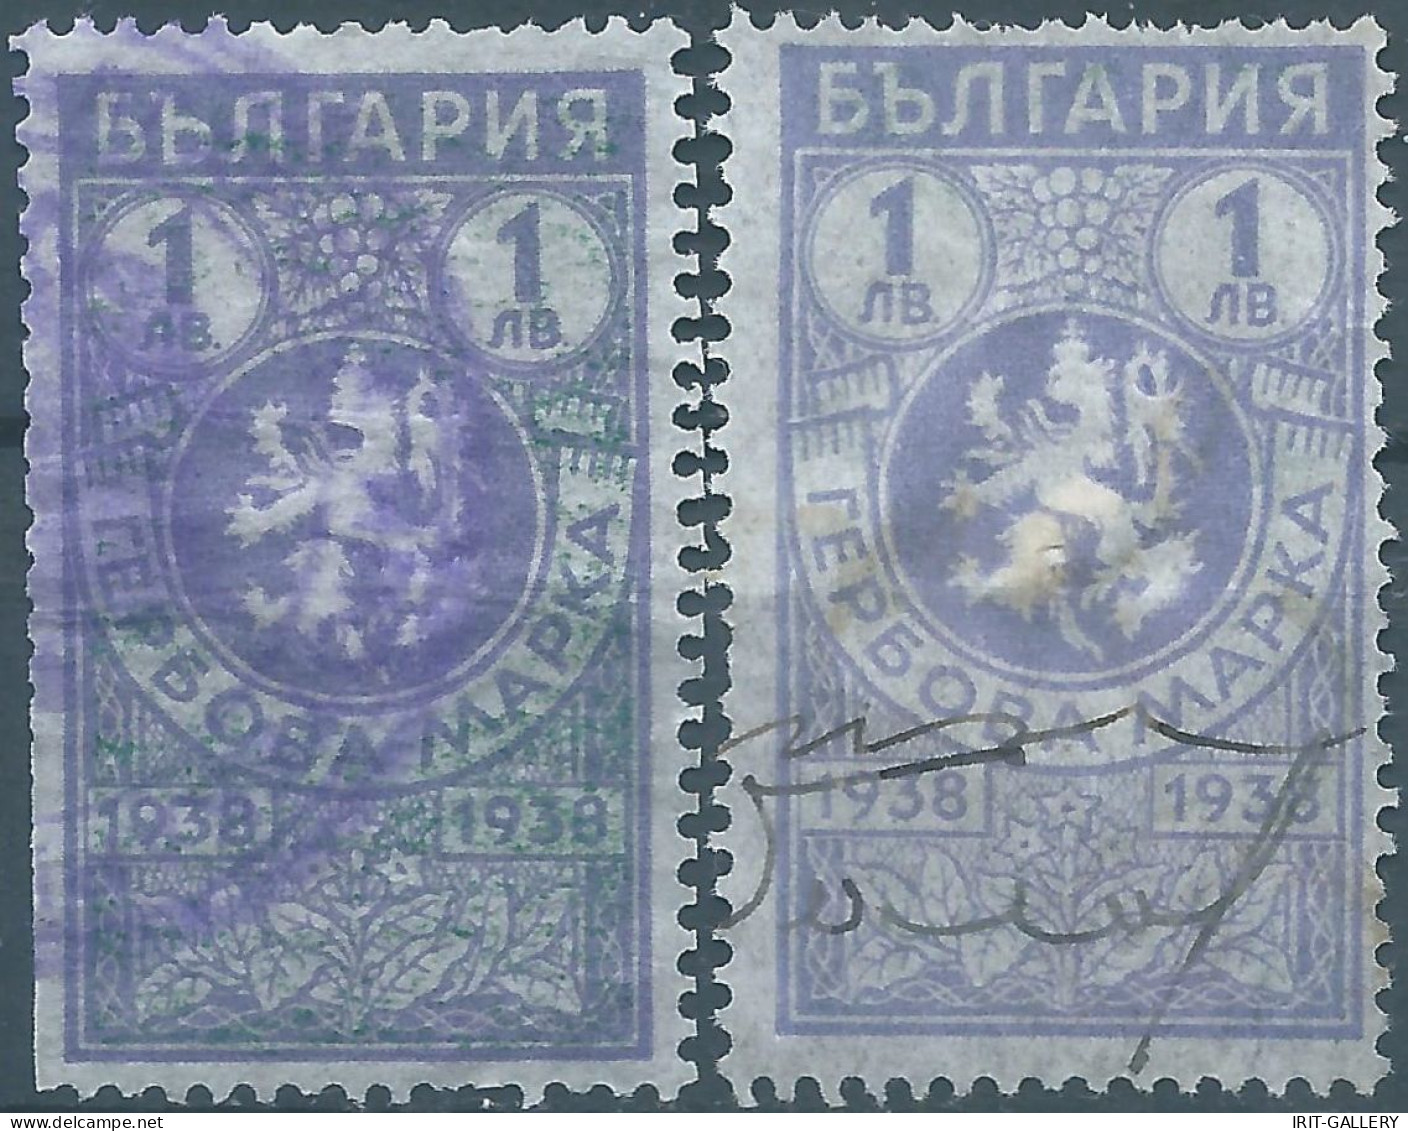 Bulgaria - Bulgarien - Bulgare,1938 Revenue Stamps Tax Fiscal,Used - Dienstmarken